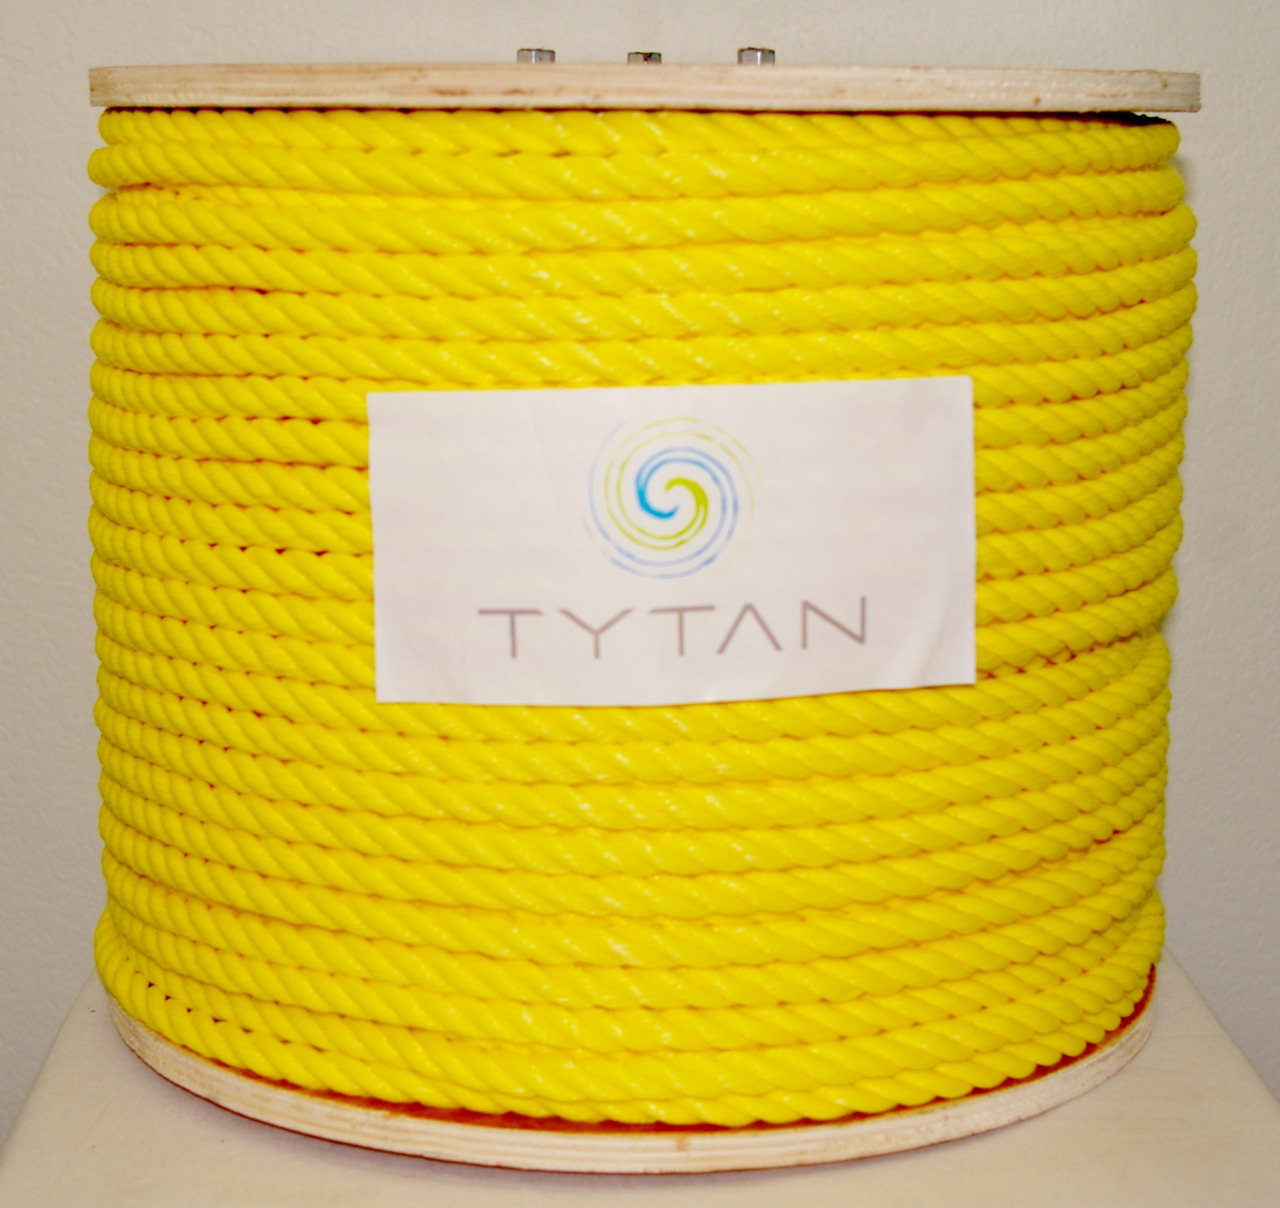 Nylon Rope, 1/2x600', White